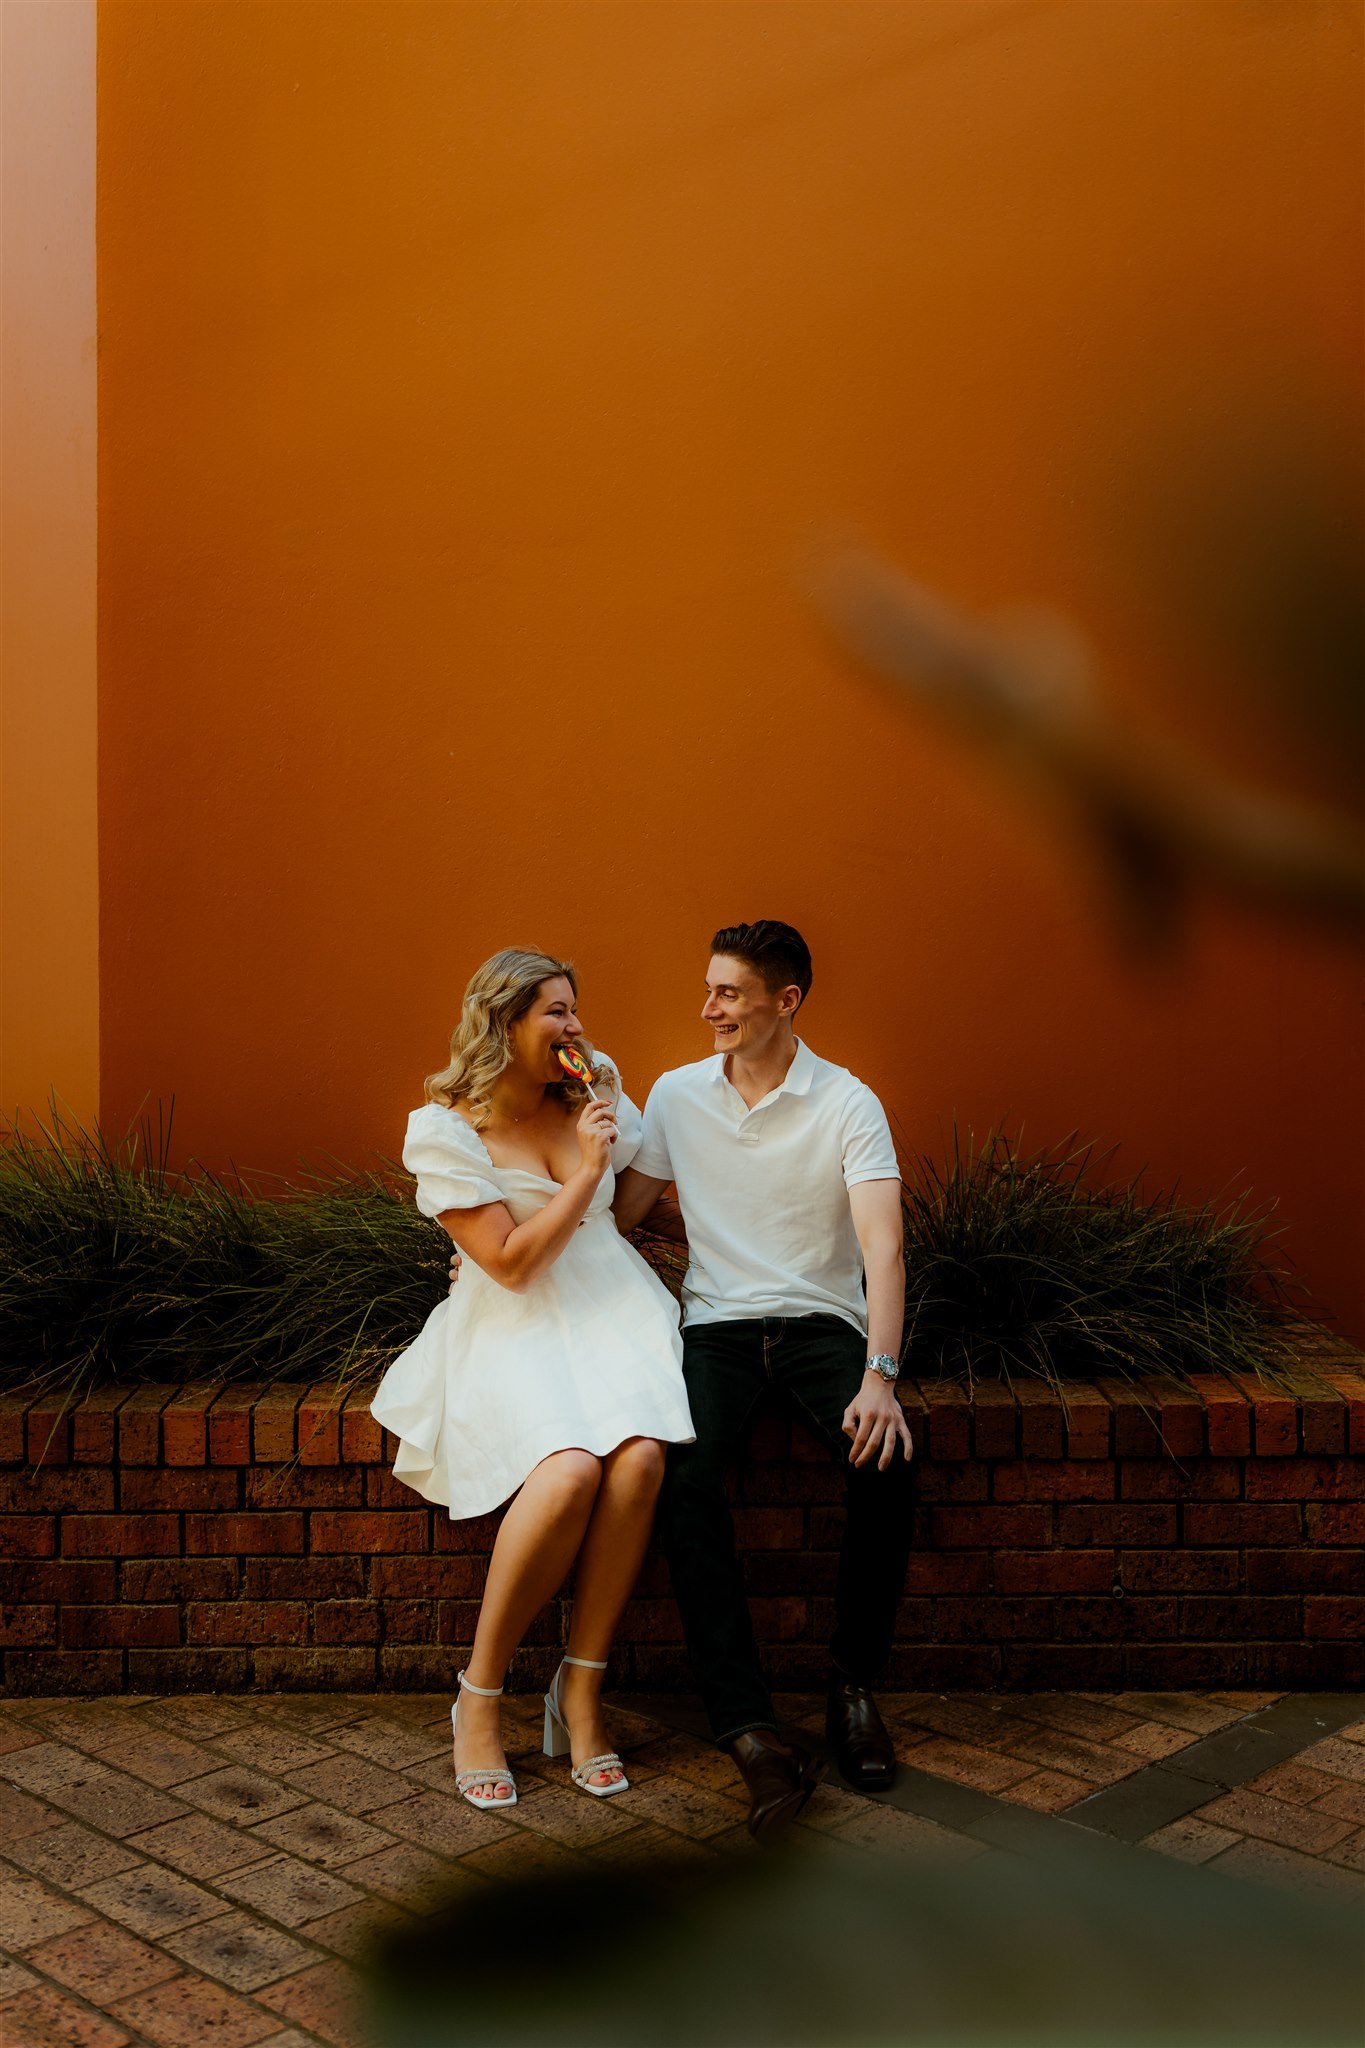 Melbourne-Engagement-Photographer-1005.jpg